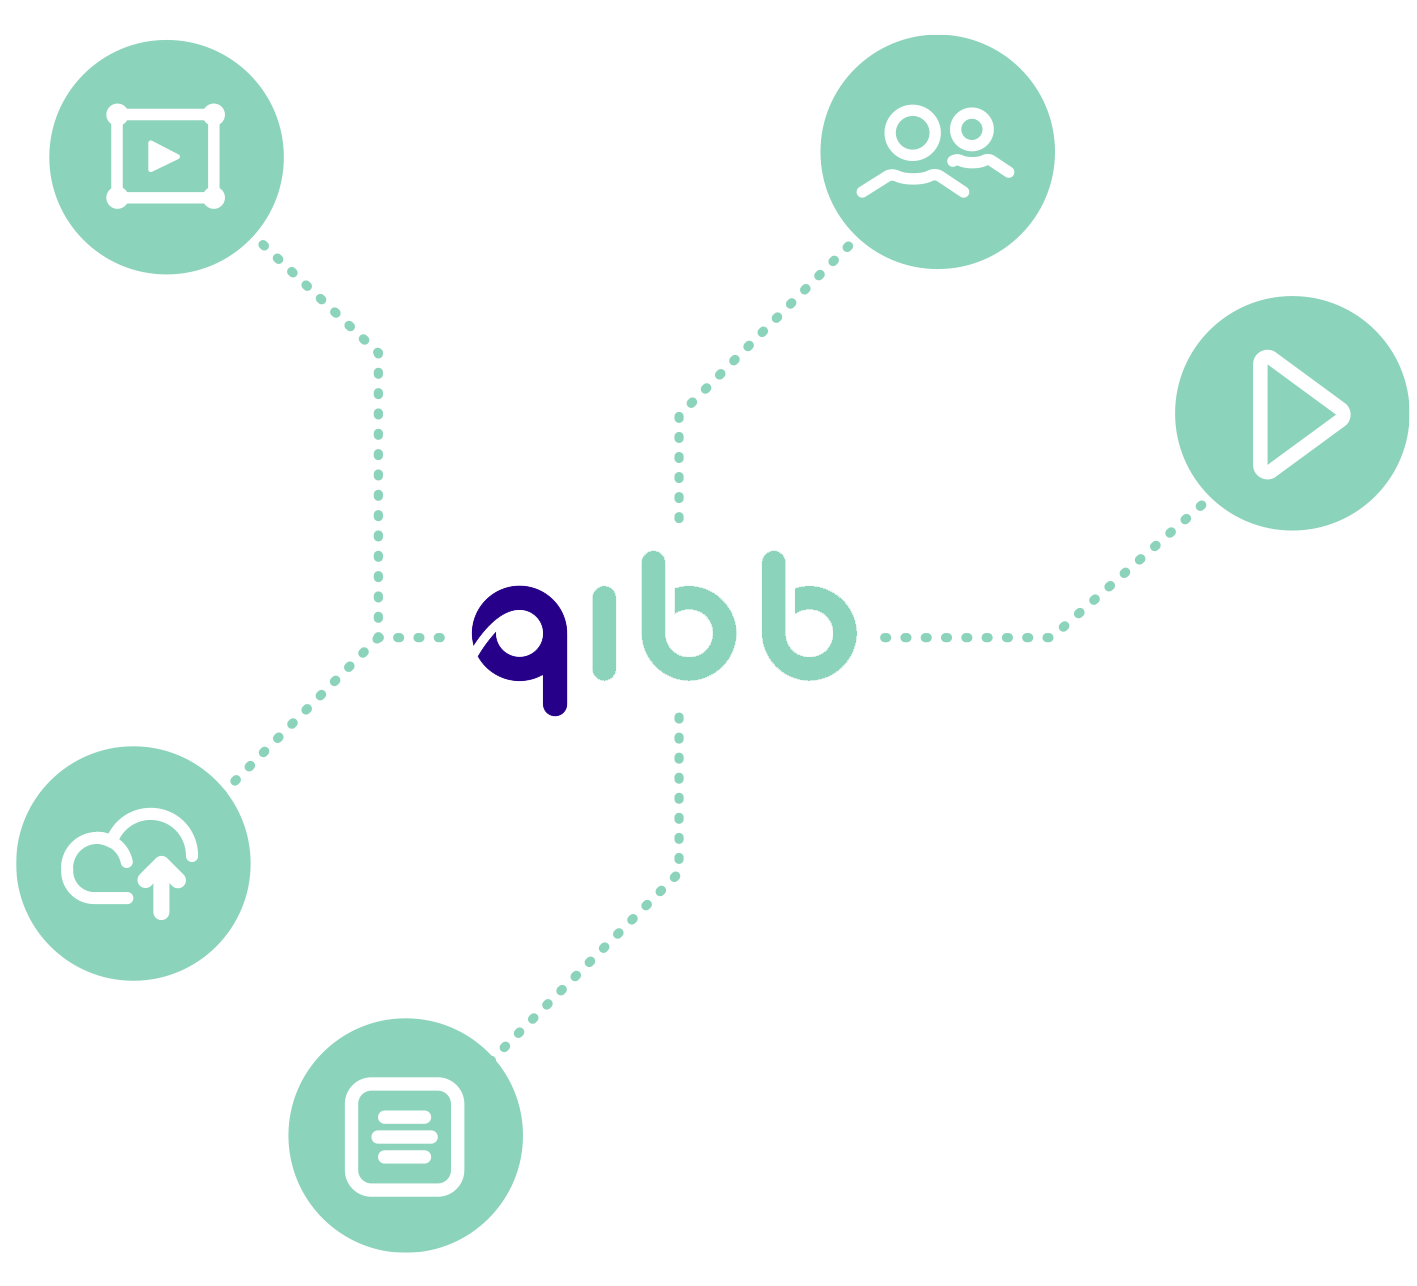 qibb integration platform for media workflows